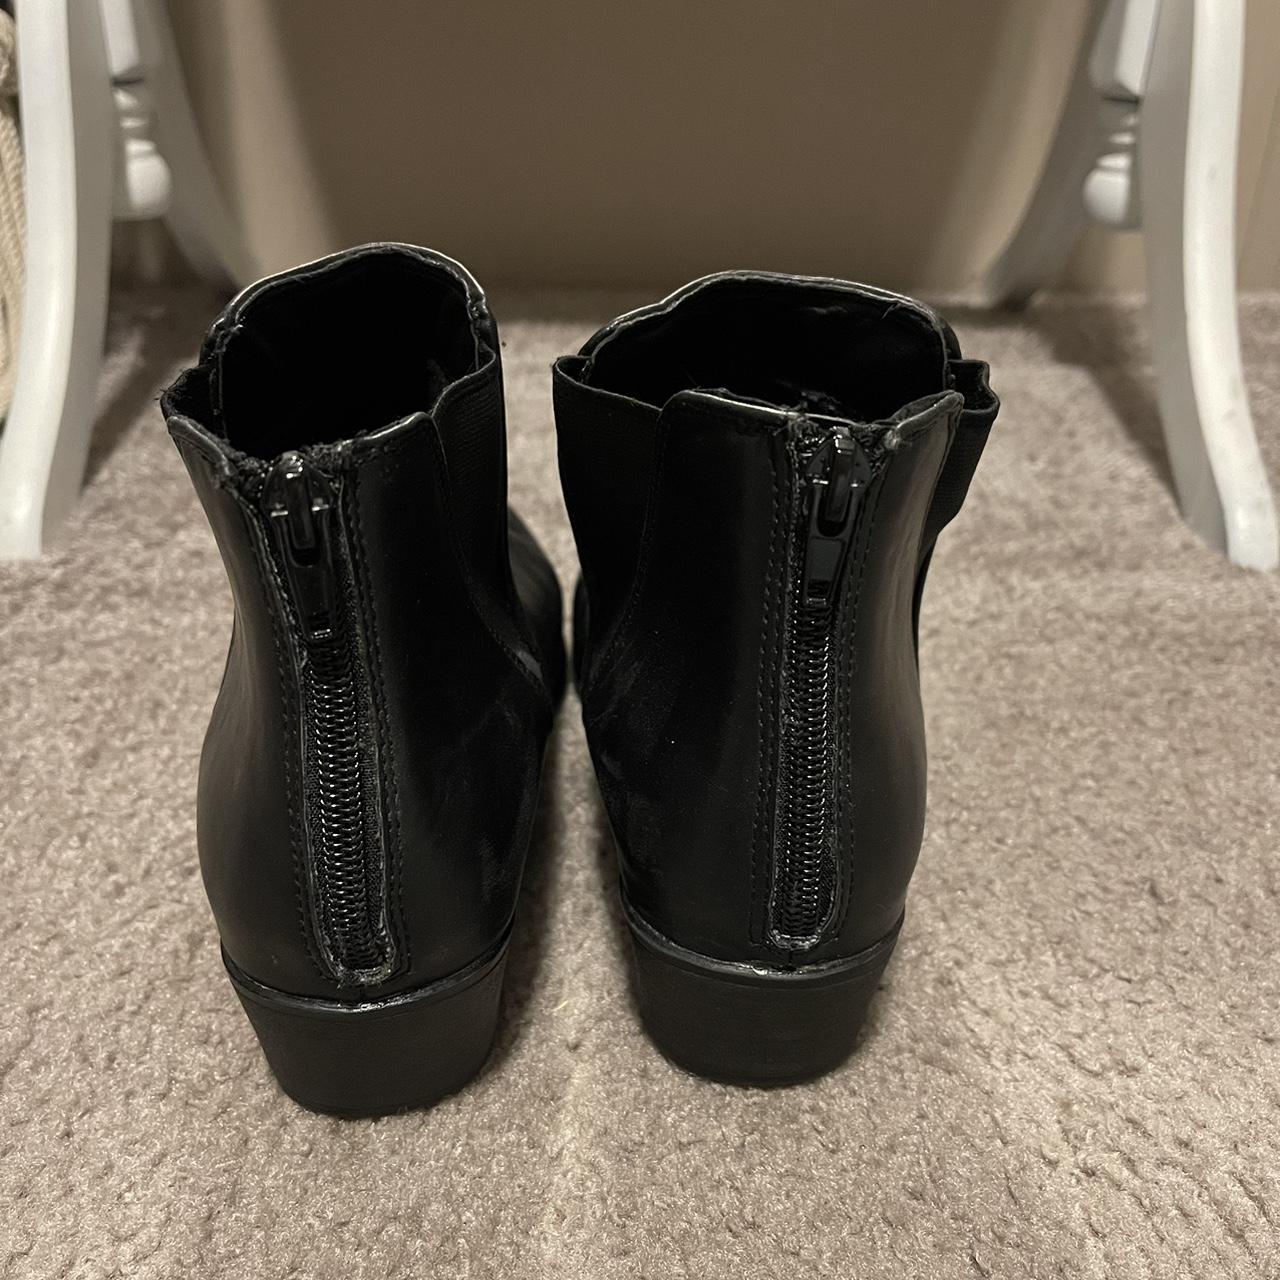 Union Bay Women's Black Boots (3)